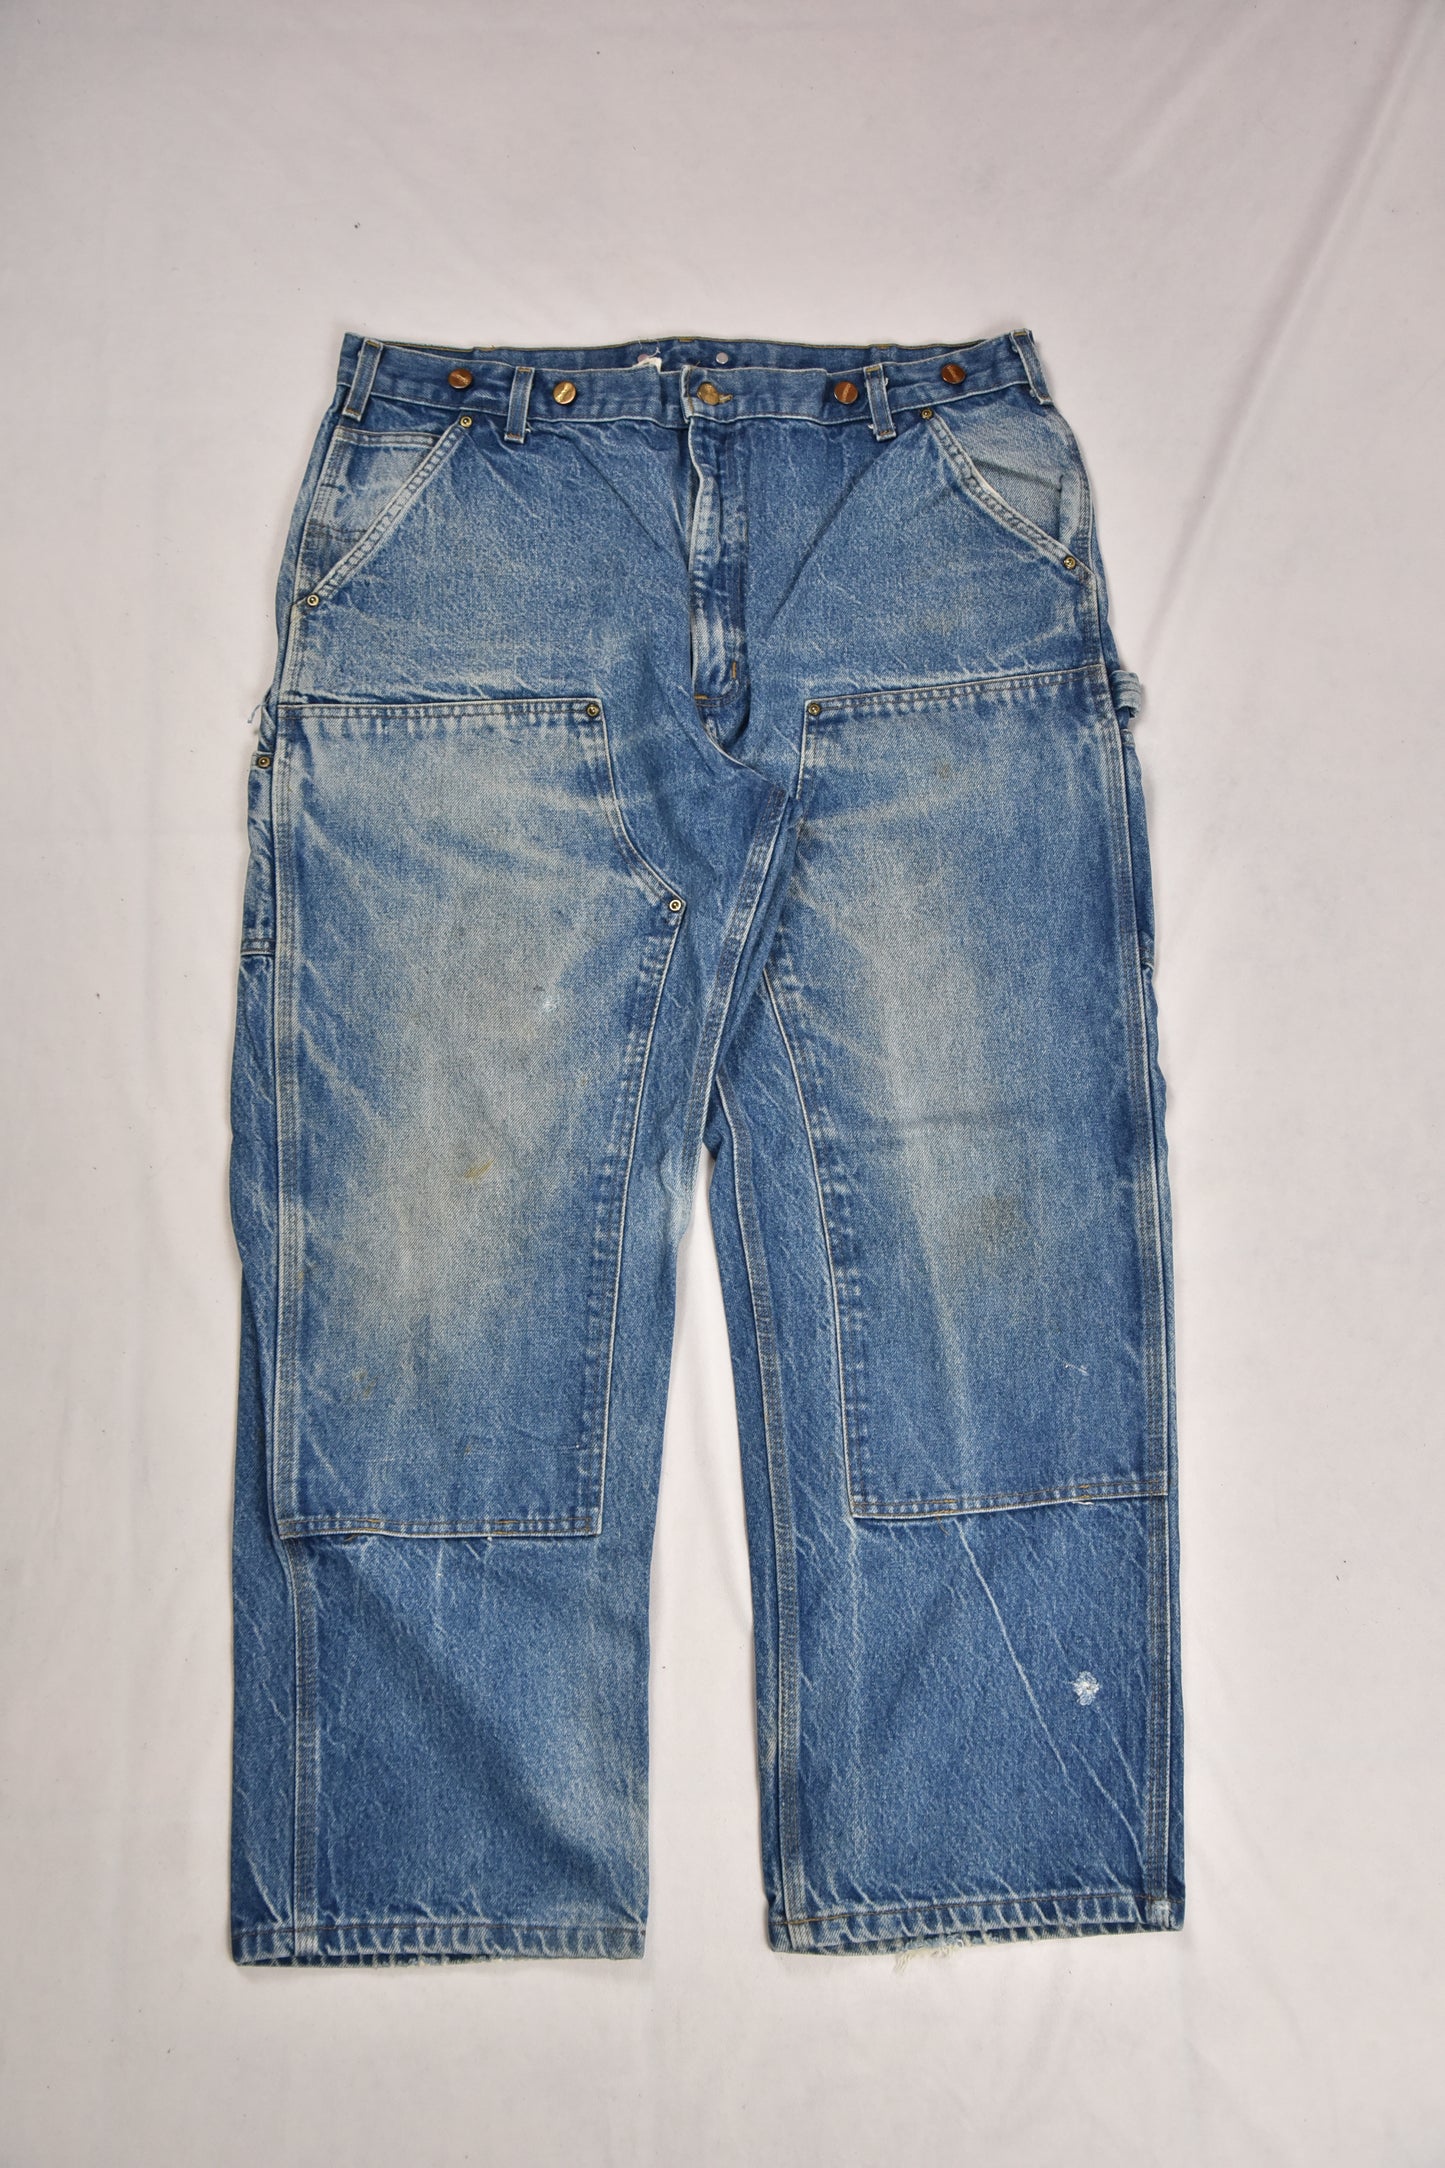 Carhartt Double Knee Workwear Jeans Vintage / 40x30